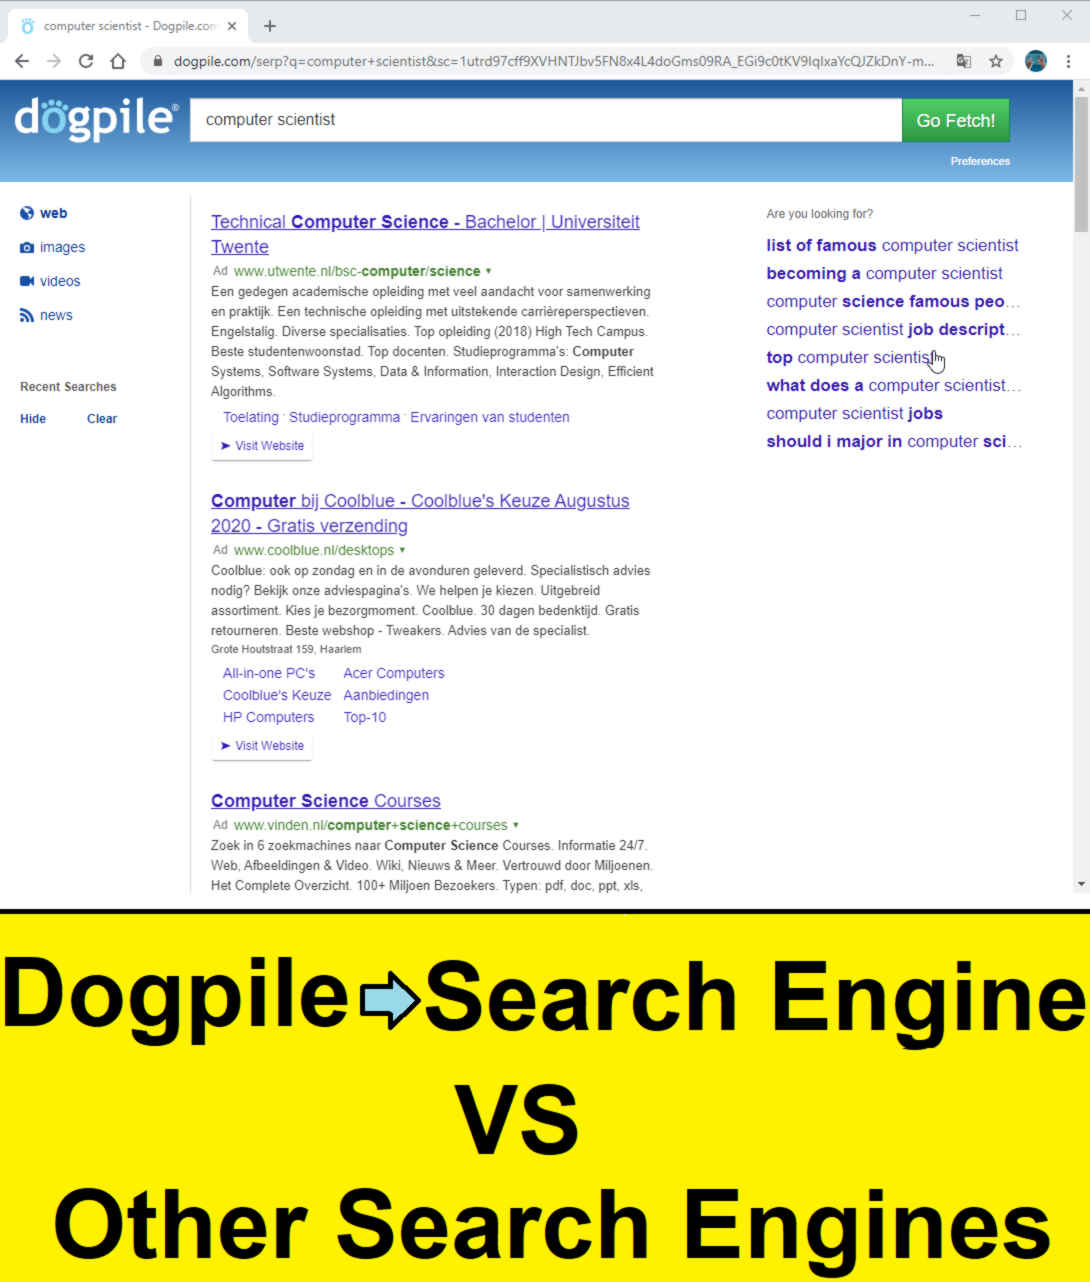 compare dogpile search engine